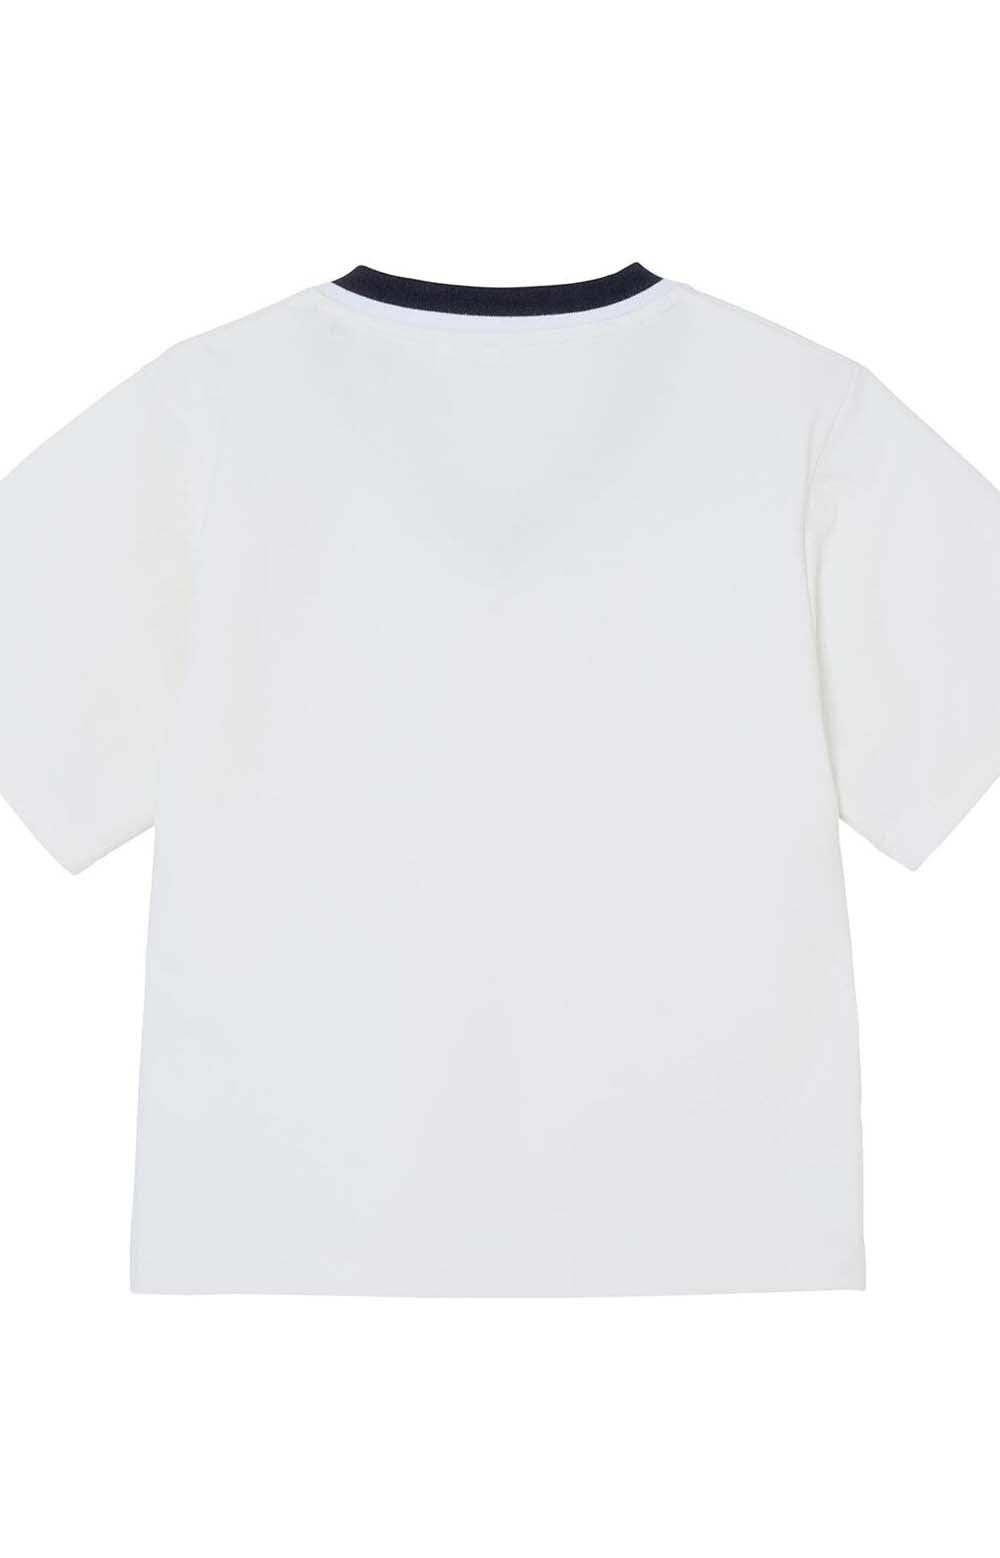 Contrast Collar T-Shirt - White